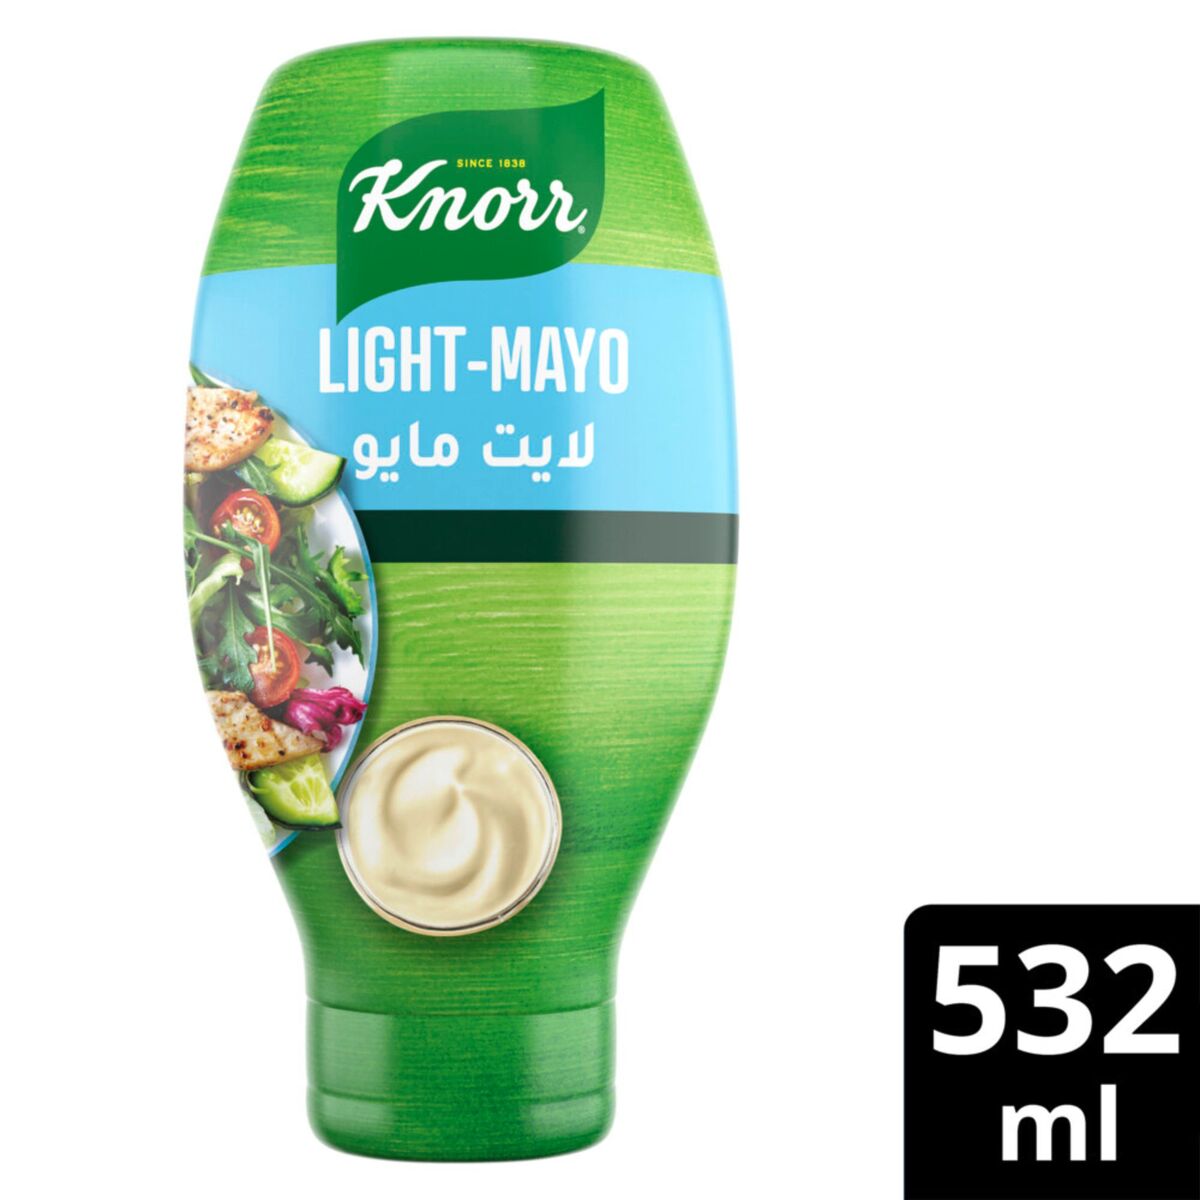 Knorr Light Mayo 532 ml